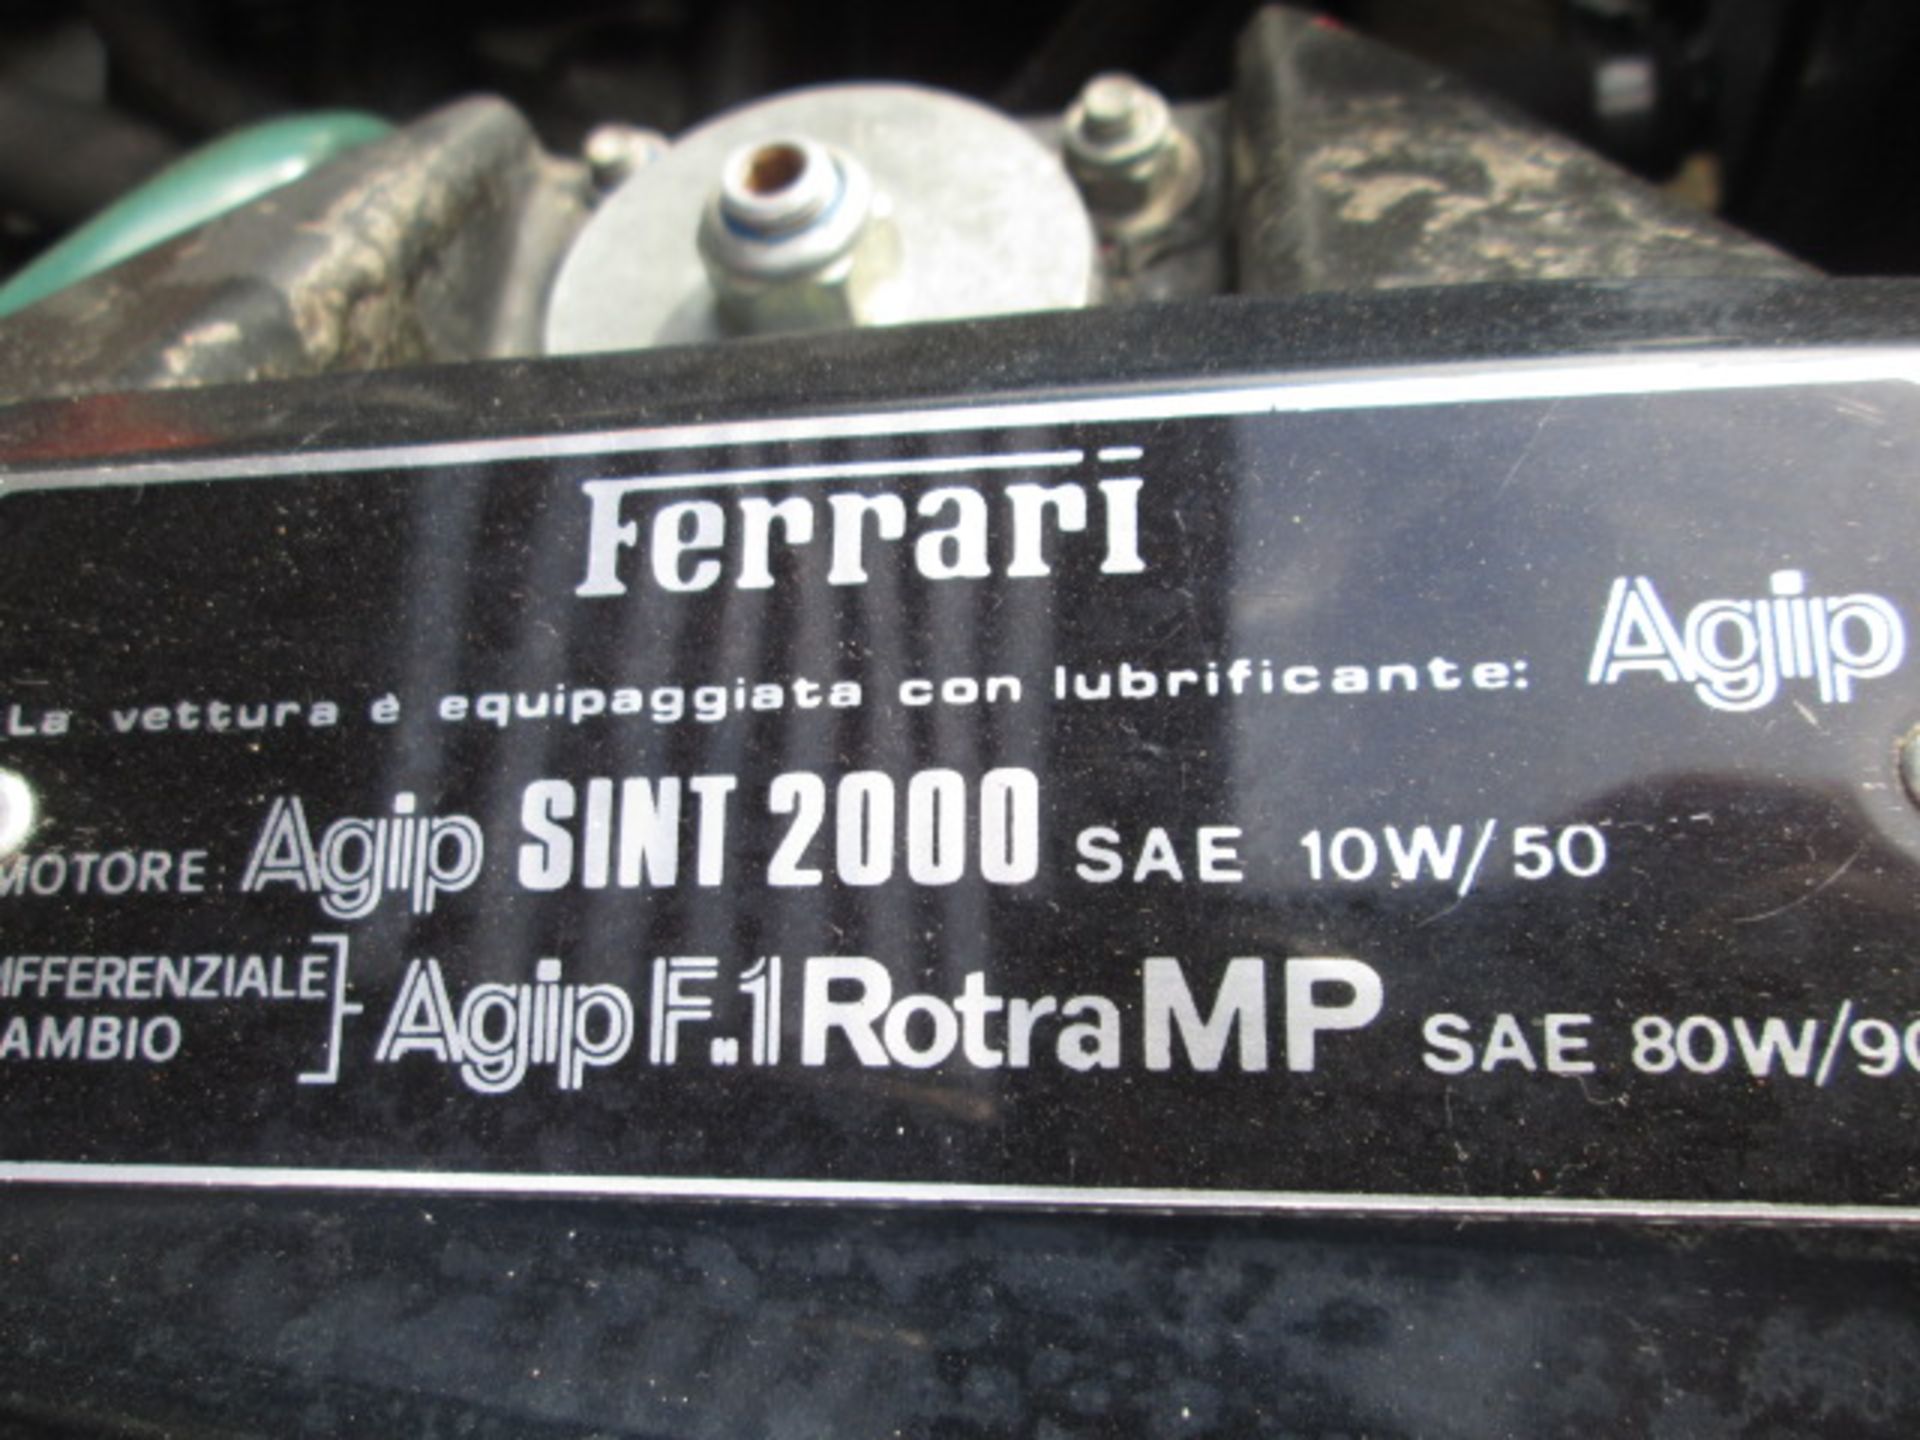 Ferrari Mondial 8 RHD 2926cc Coupe - Image 22 of 25